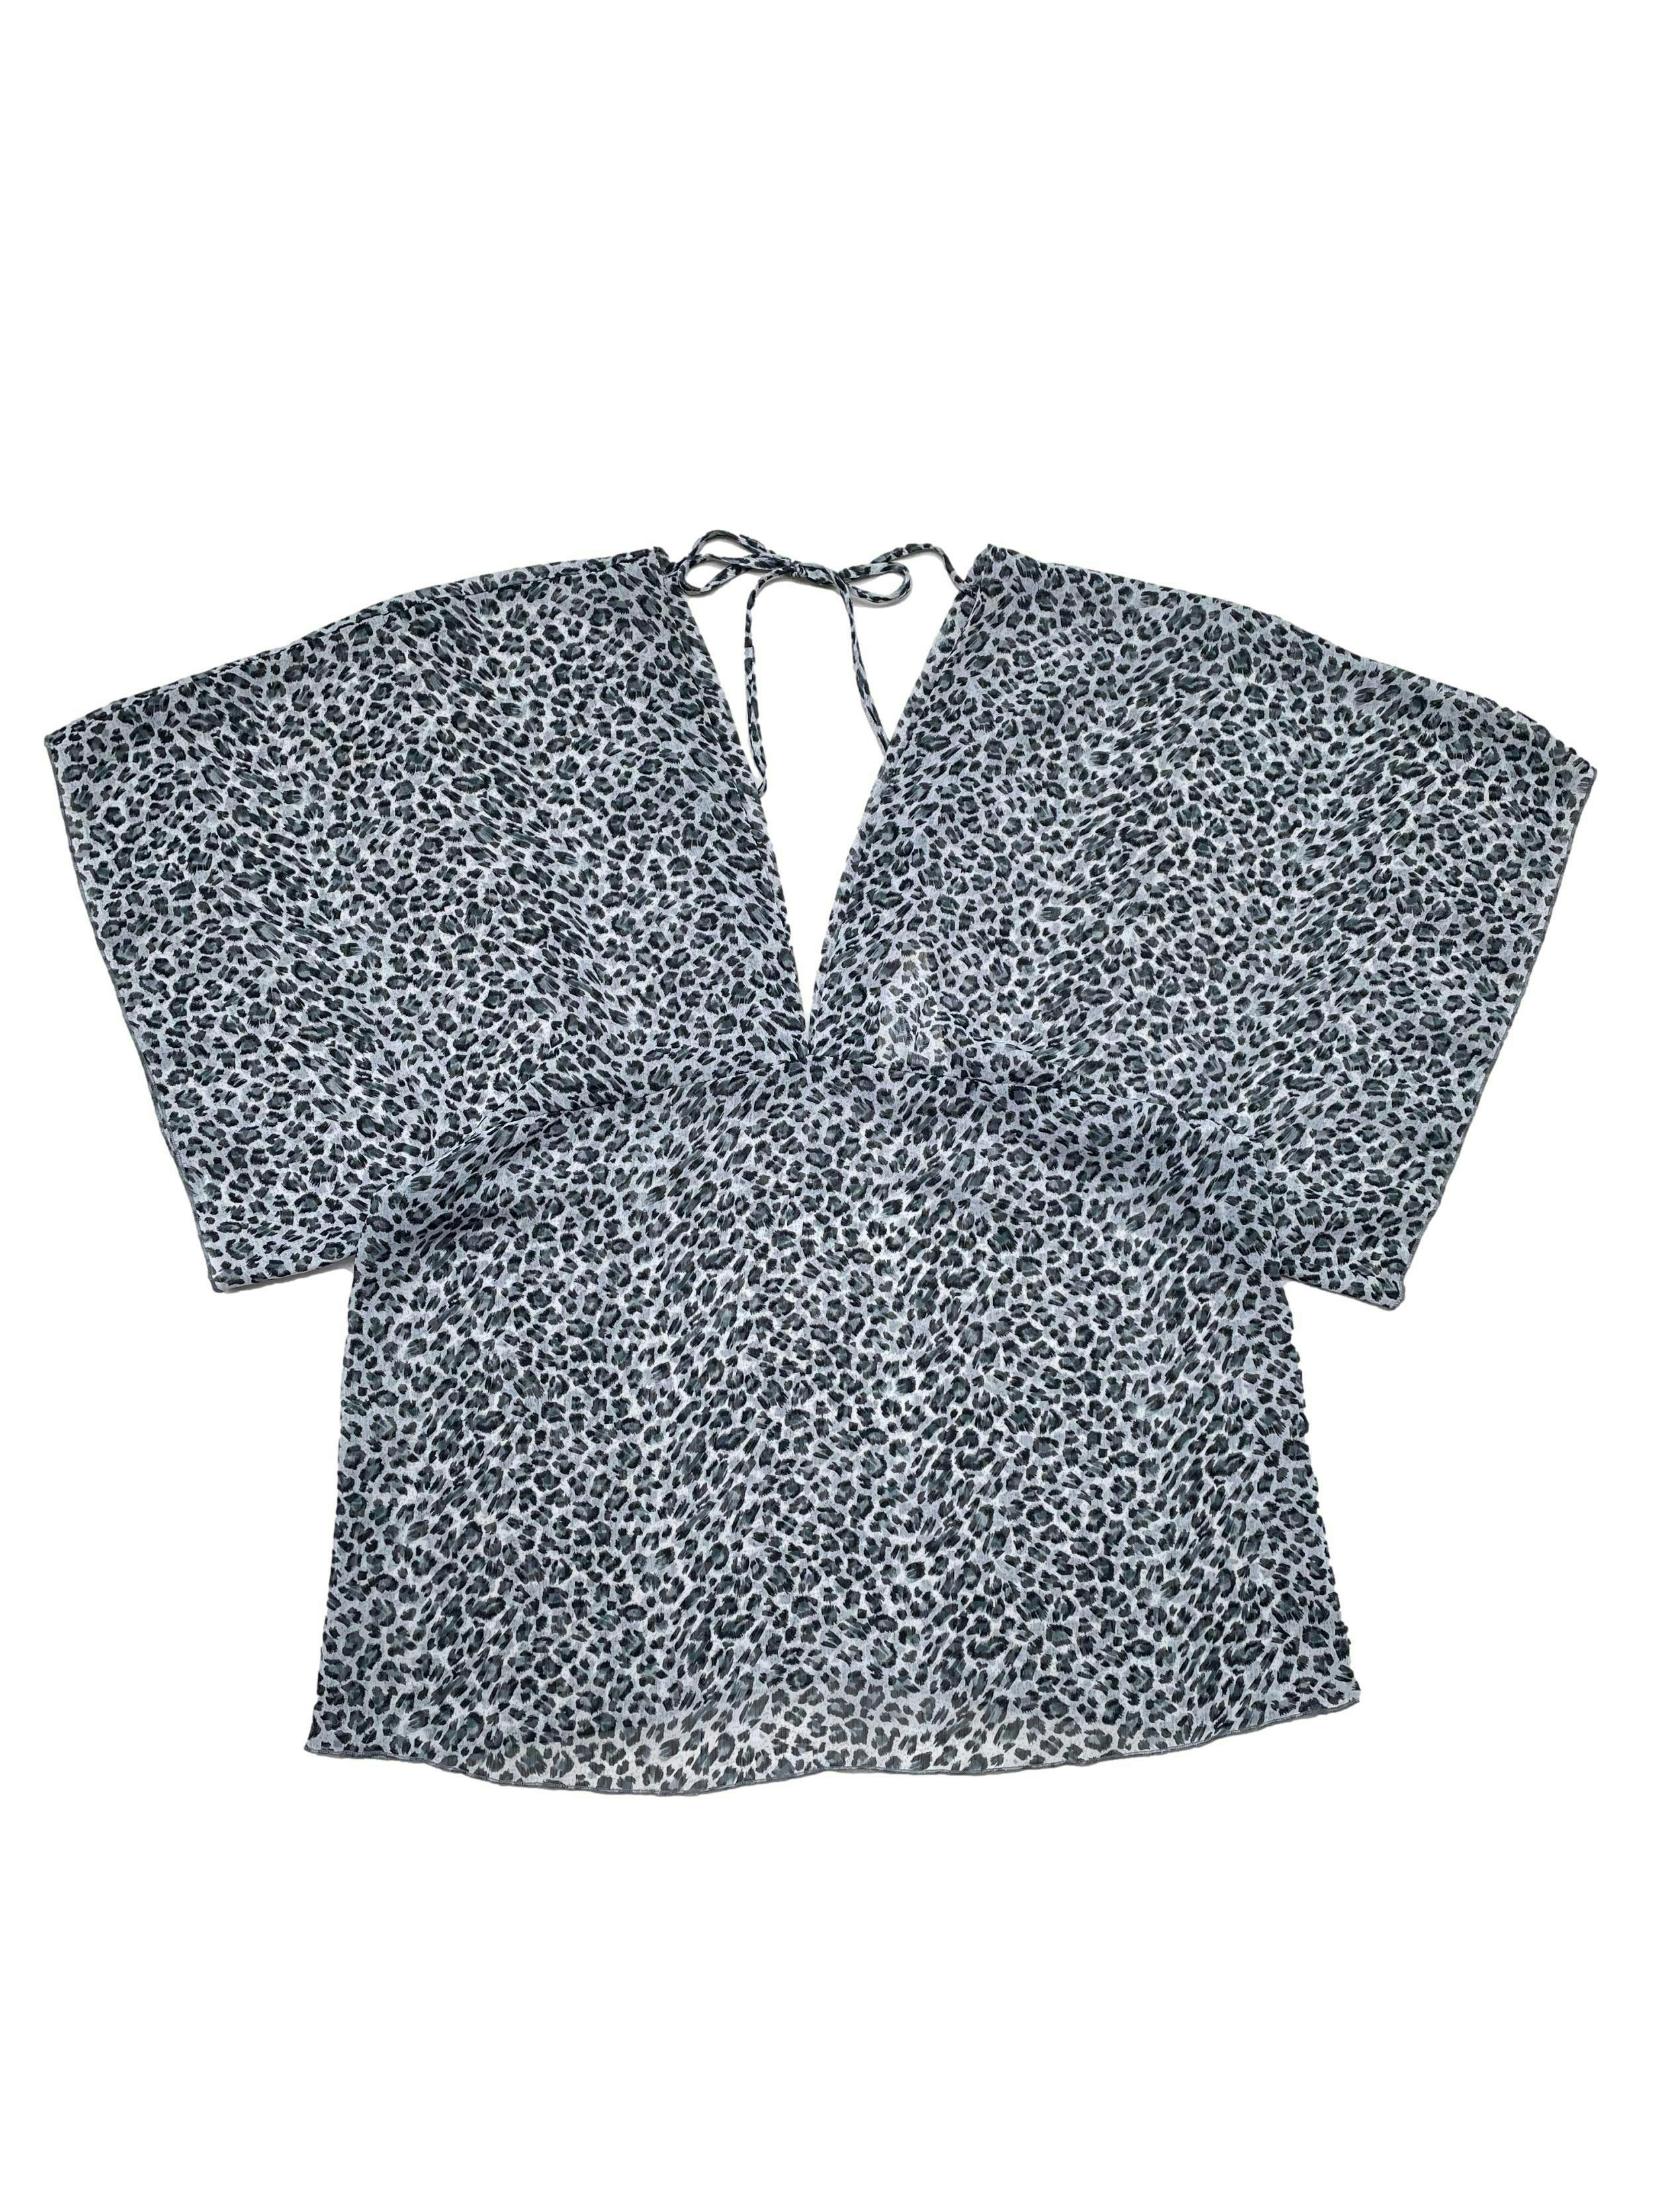 Blusa The Clothing Company de gasa animal print en tonos plomos y negros, manga kimono. Ancho 105cm Largo 75cm